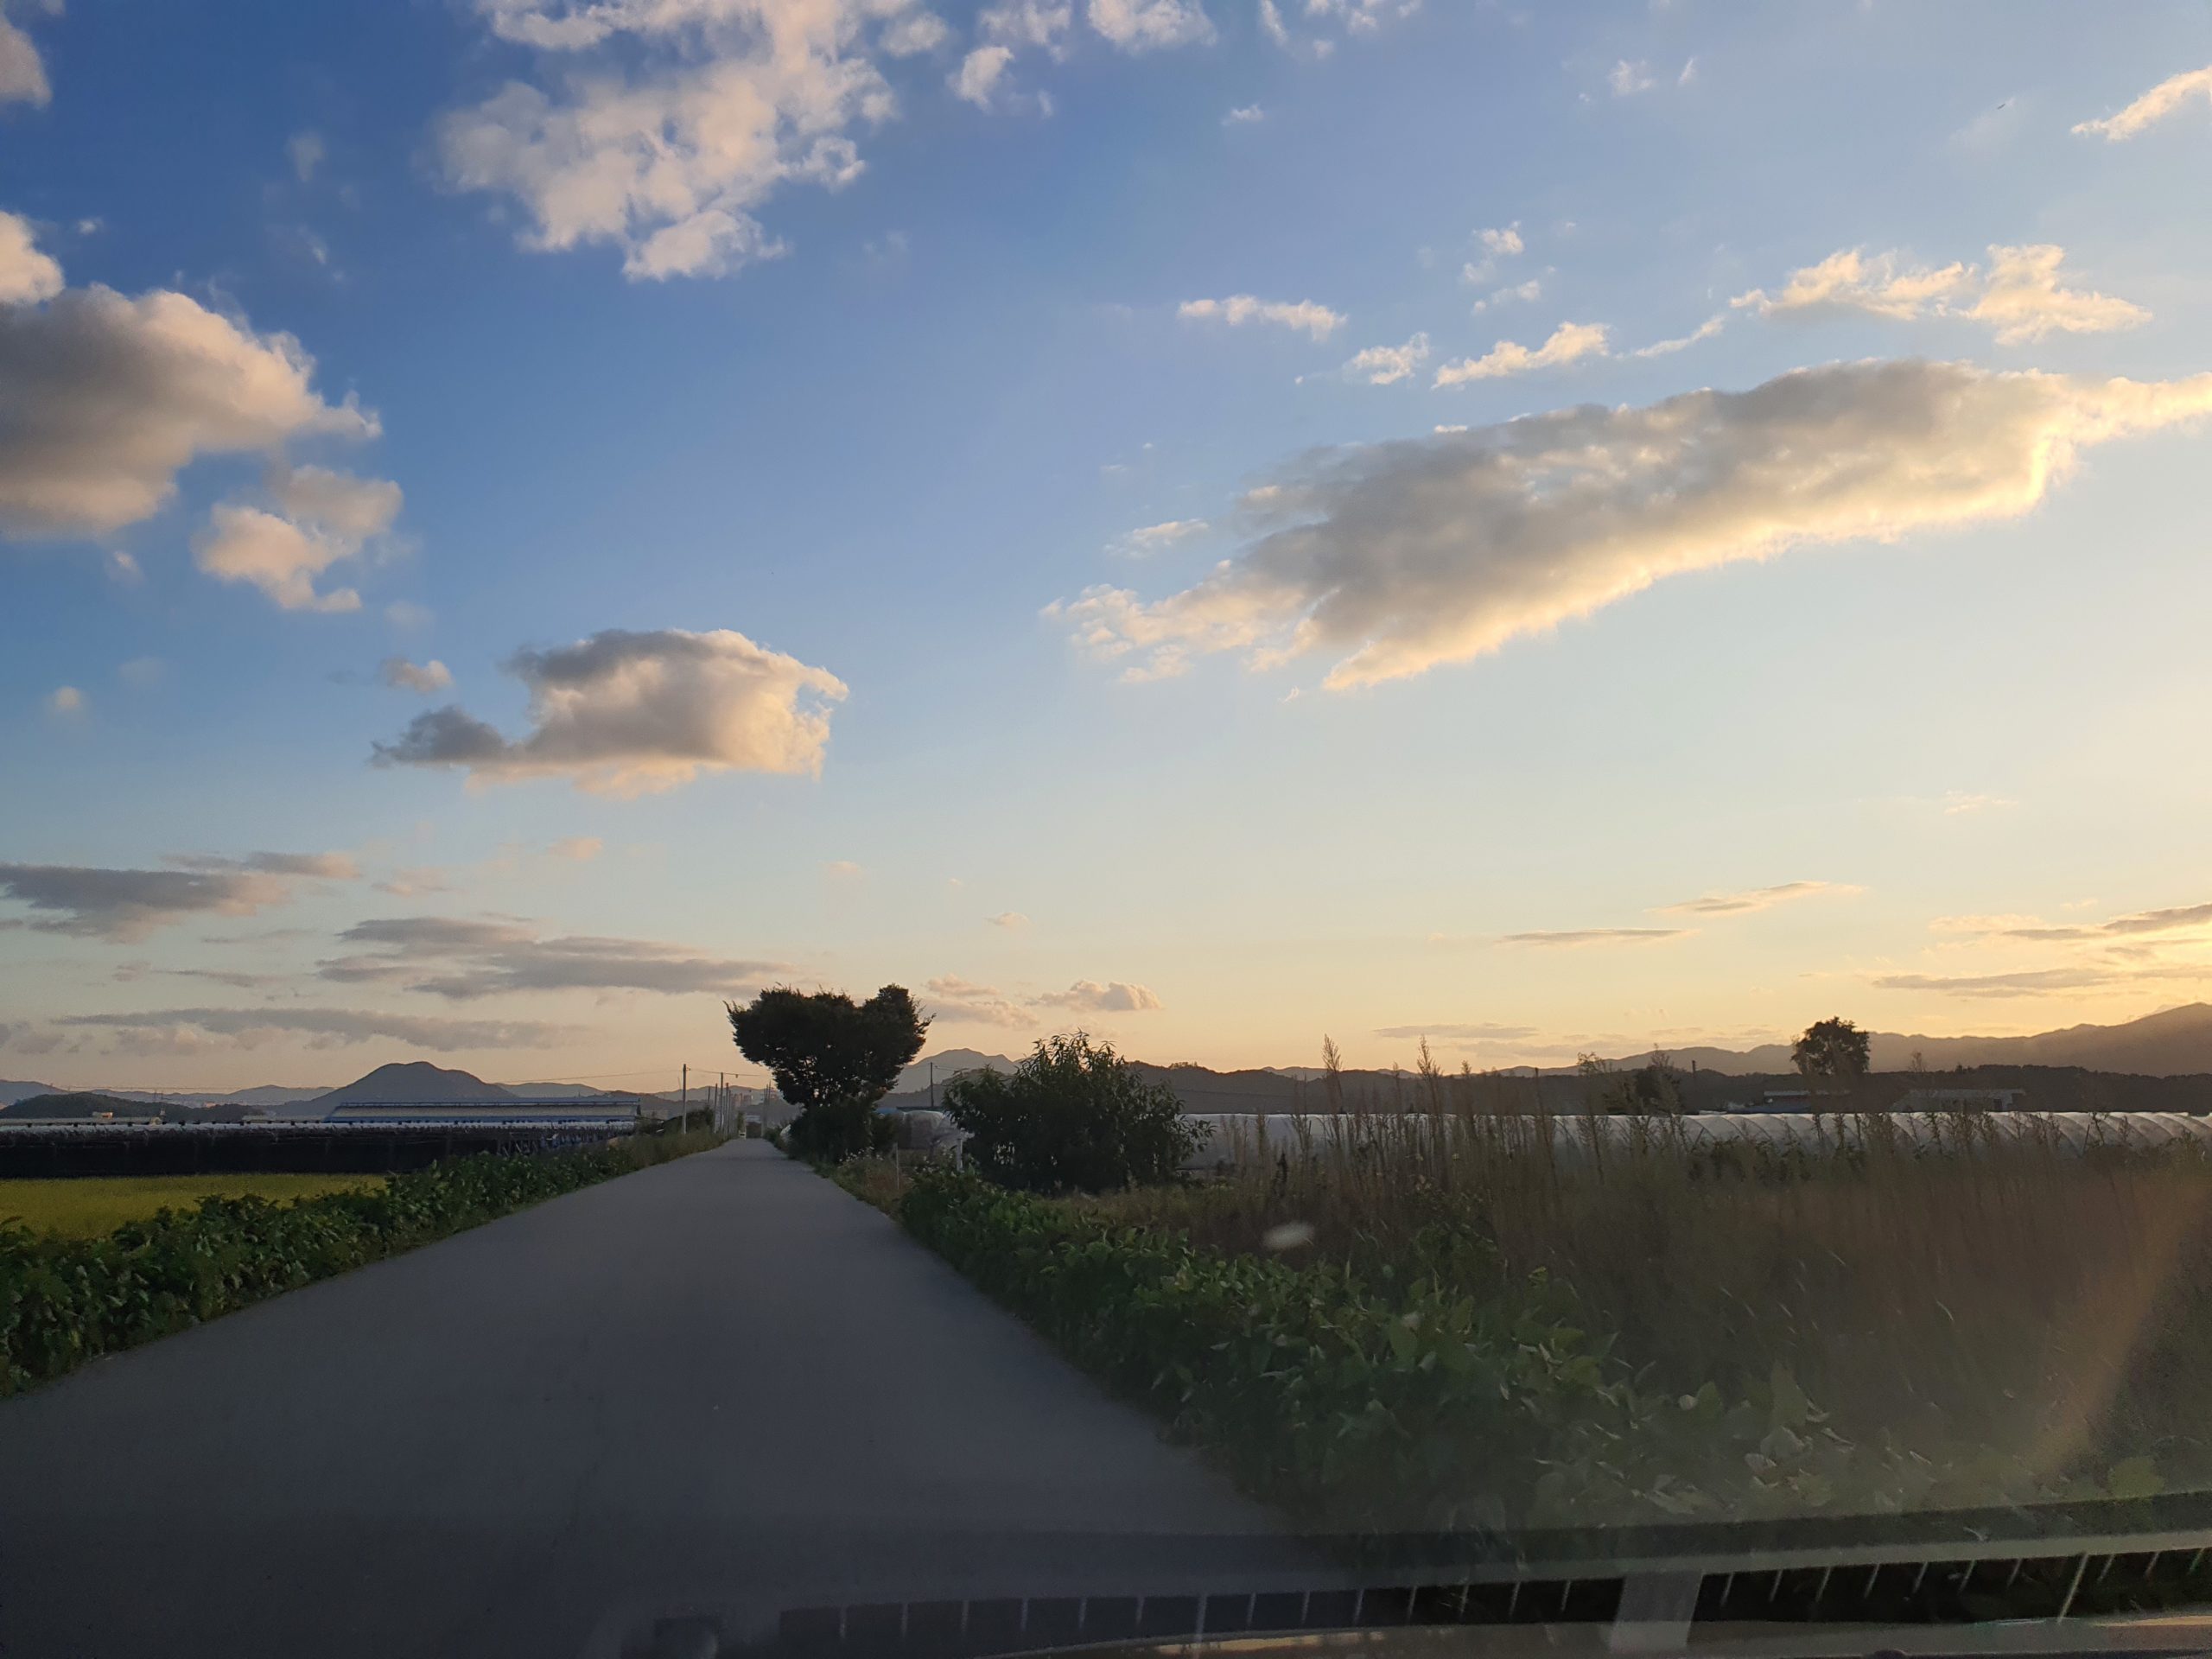 Rural road at dusk